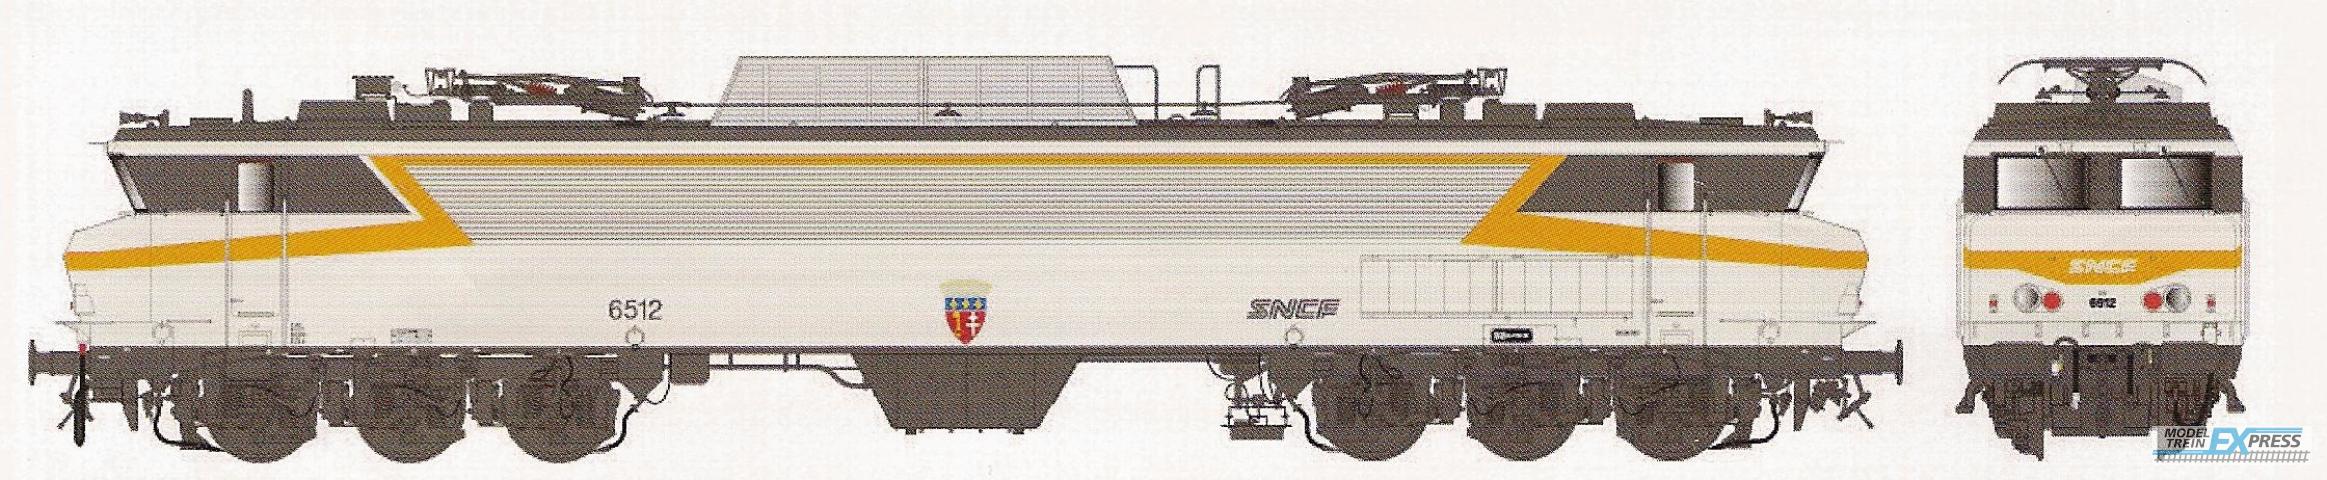 LS Models 10827 CC 6512, grijs/oranje, noedels logo, blazoen Narbonne, 200 km/h  /  Ep. IV  /  SNCF  /  HO  /  AC  /  1 P.